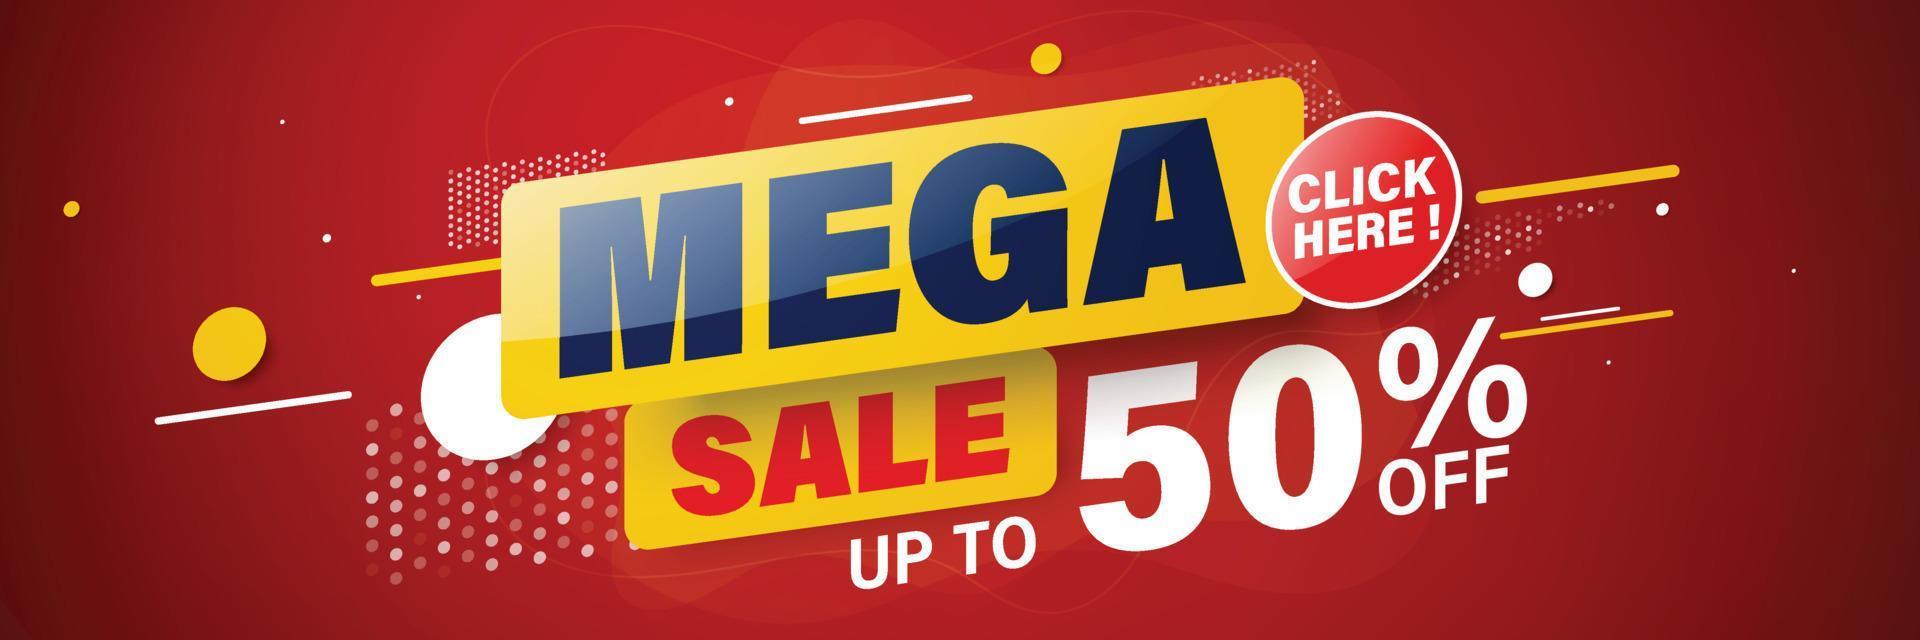 Mega sale banner template design for web or social media. vector